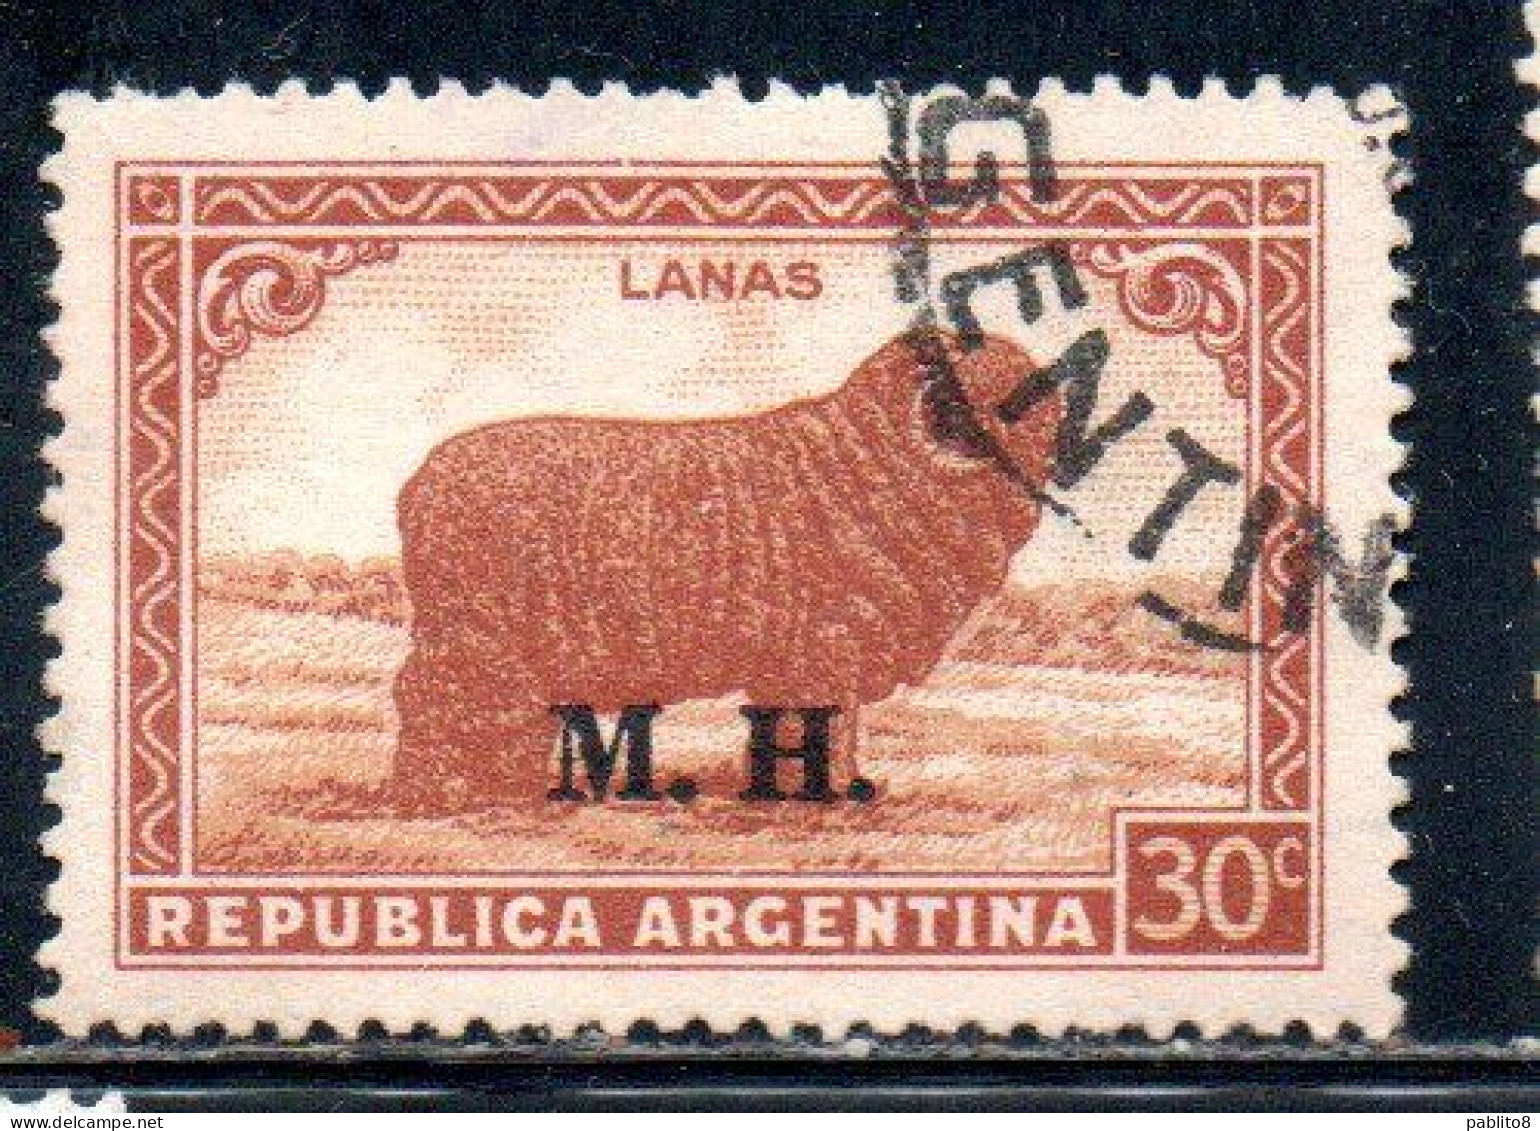 ARGENTINA 1935 1937 OFFICIAL DEPARTMENT STAMP OVERPRINTED M.H. MINISTRY OF FINANCE MH 30c USED USADO - Dienstmarken